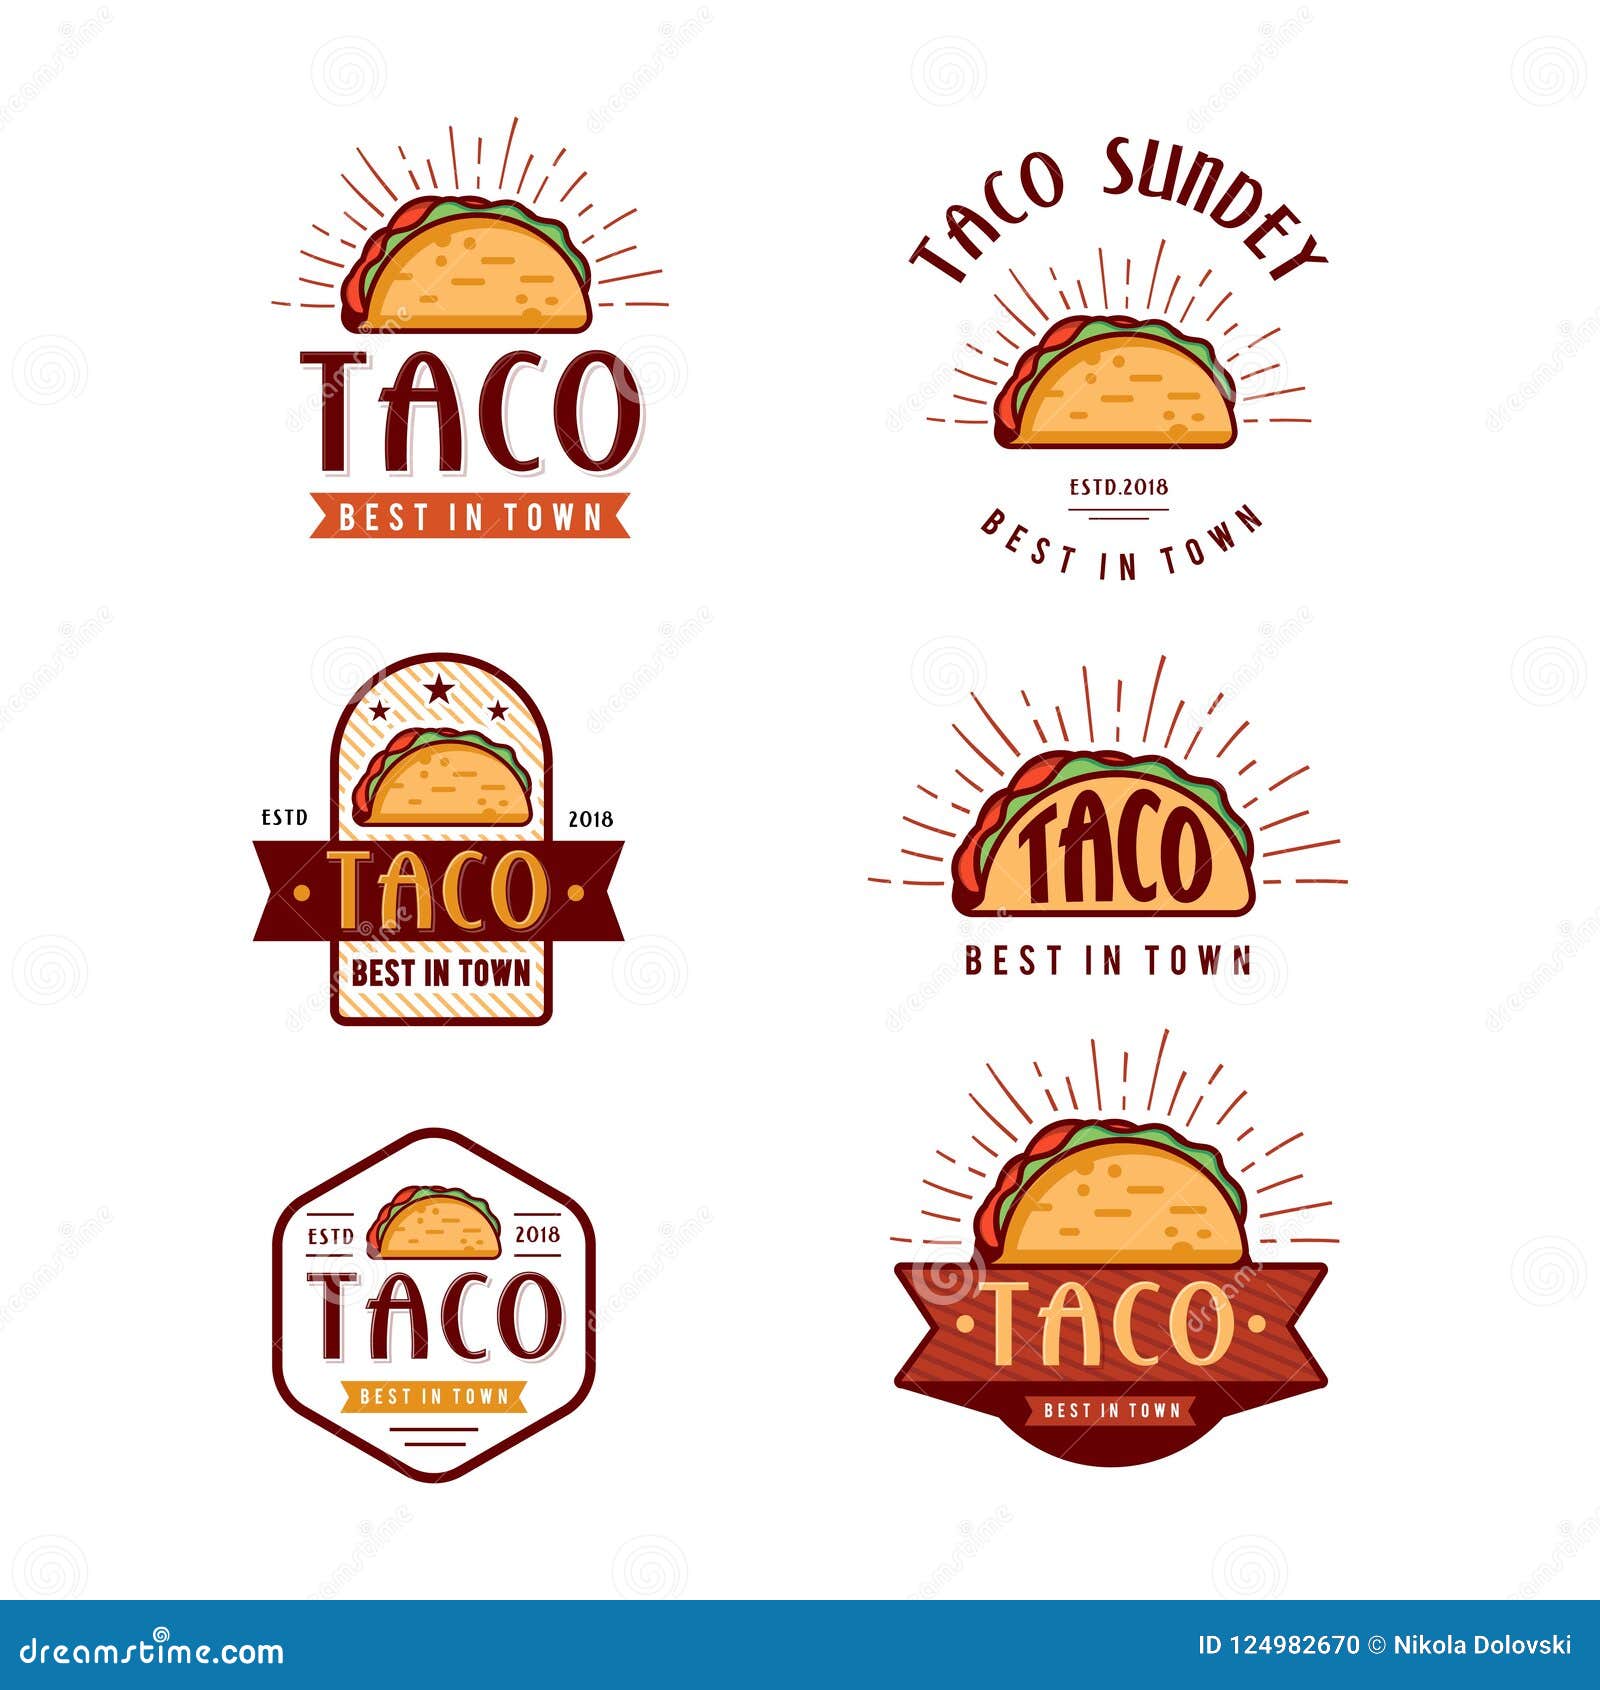 retro food logos